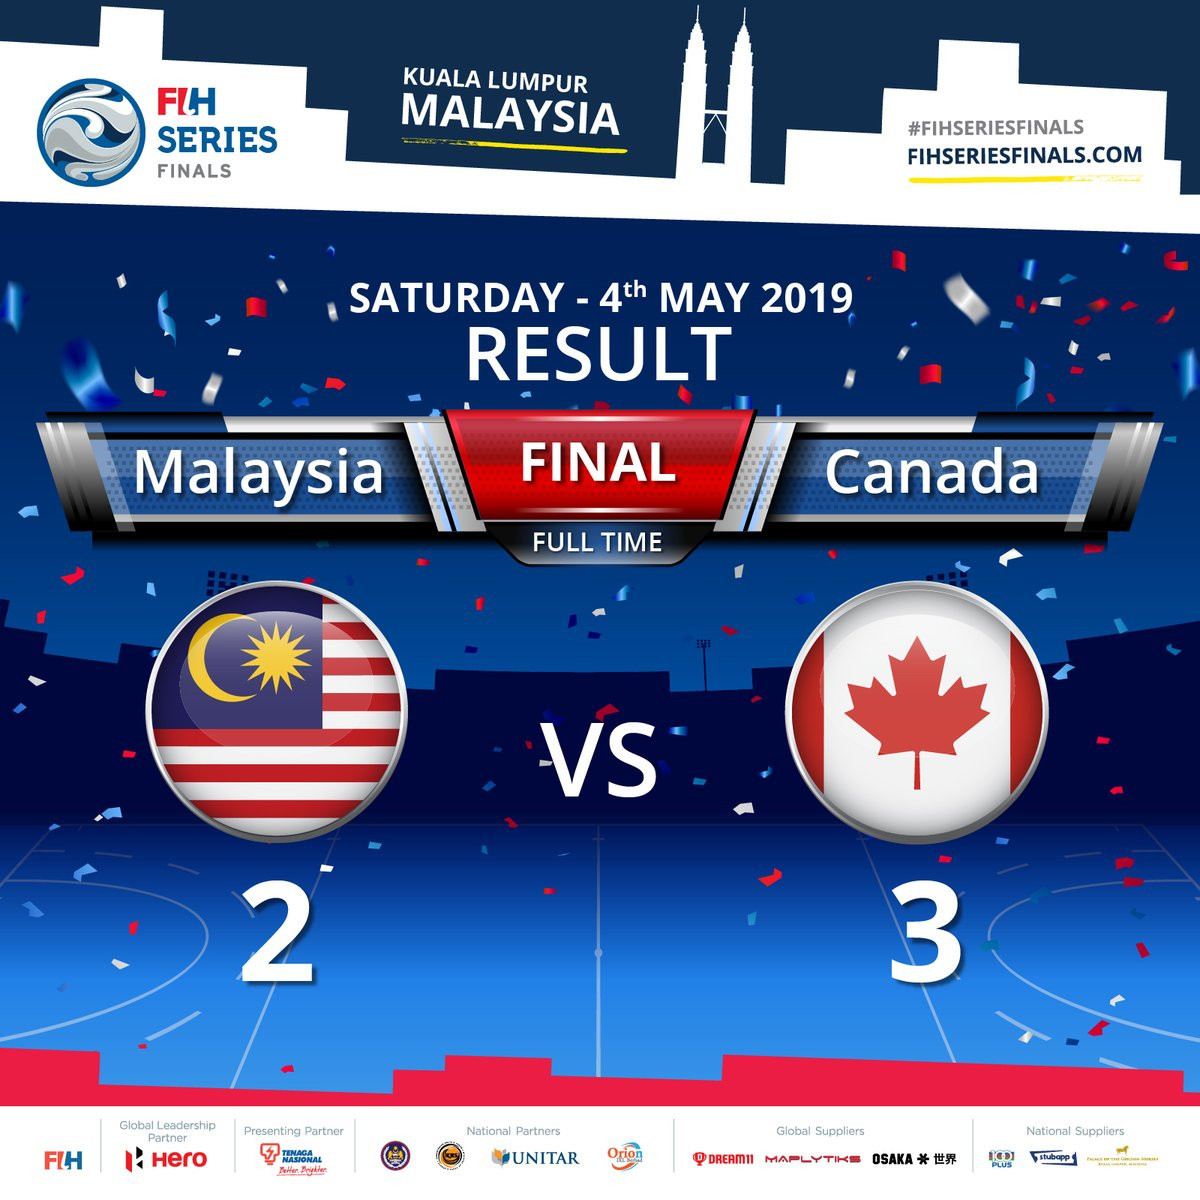 Canada beat Malaysia to win FIH Series Finals event in Kuala Lumpur